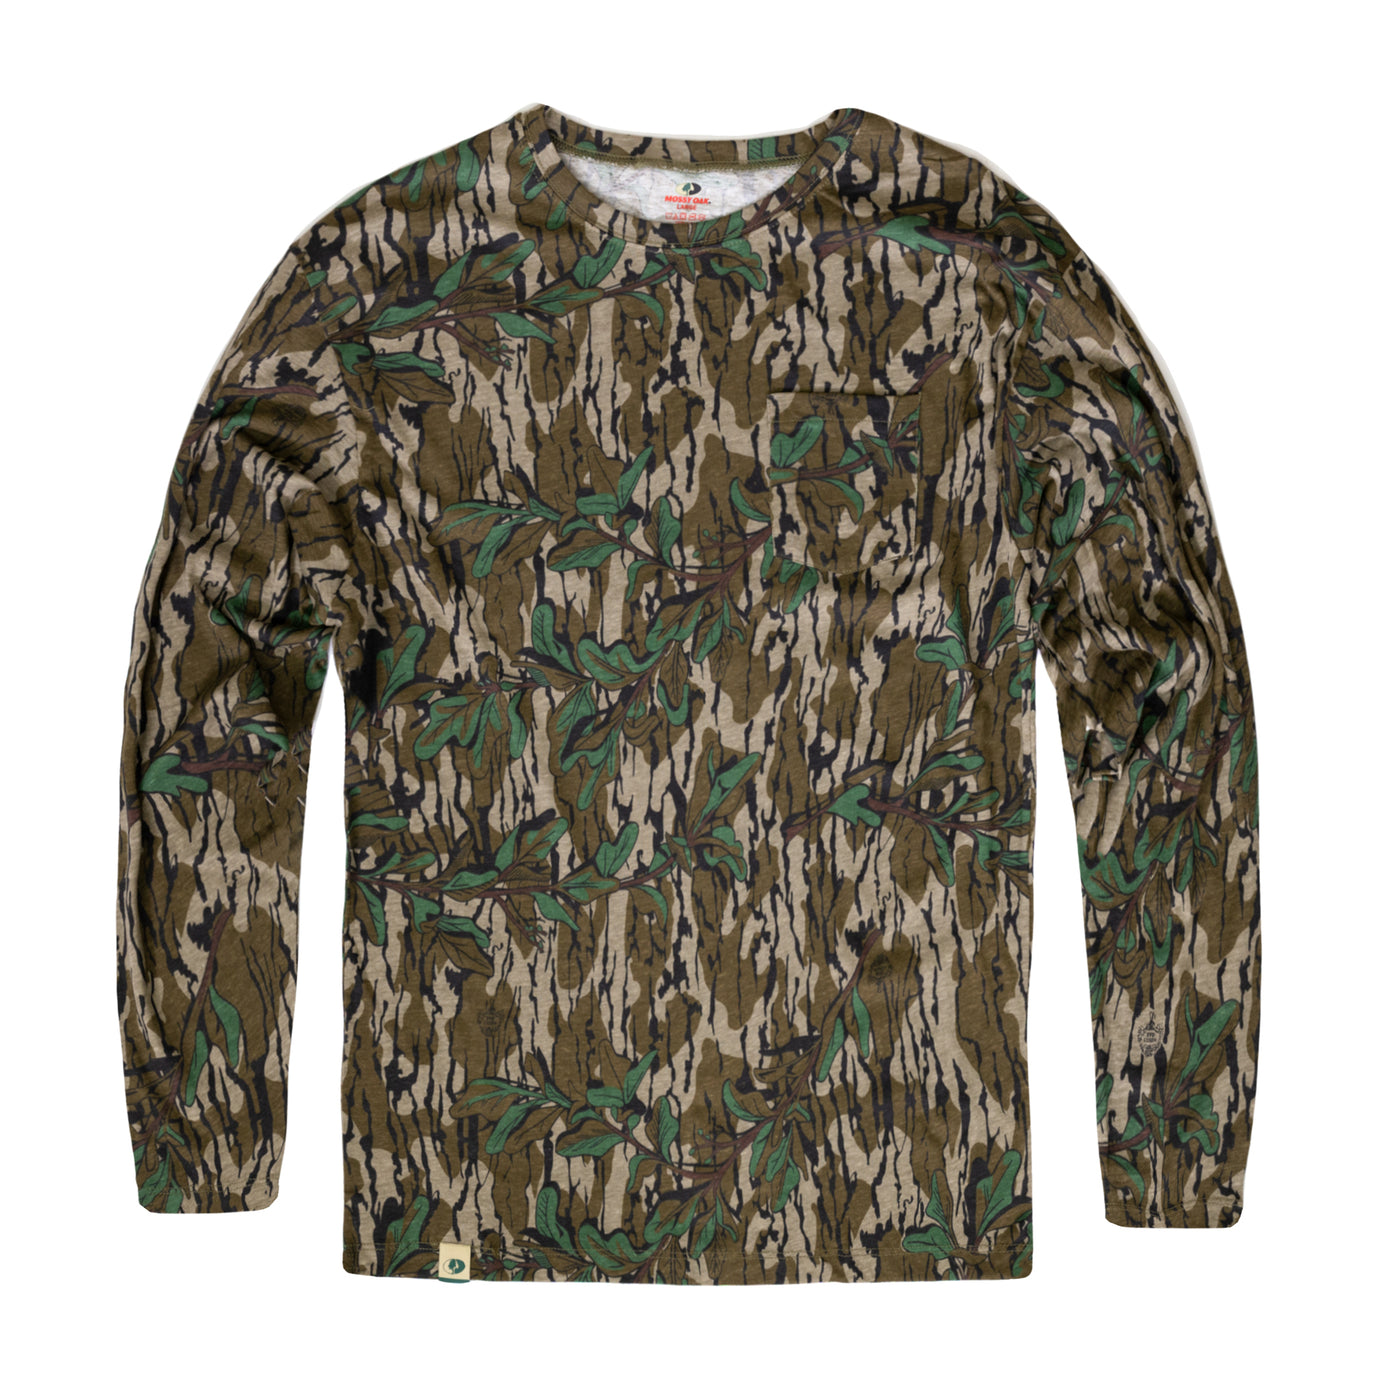 Mossy Oak Realtree Camo Hunting Fishing Camping long sleeve shirt Small -  4XL